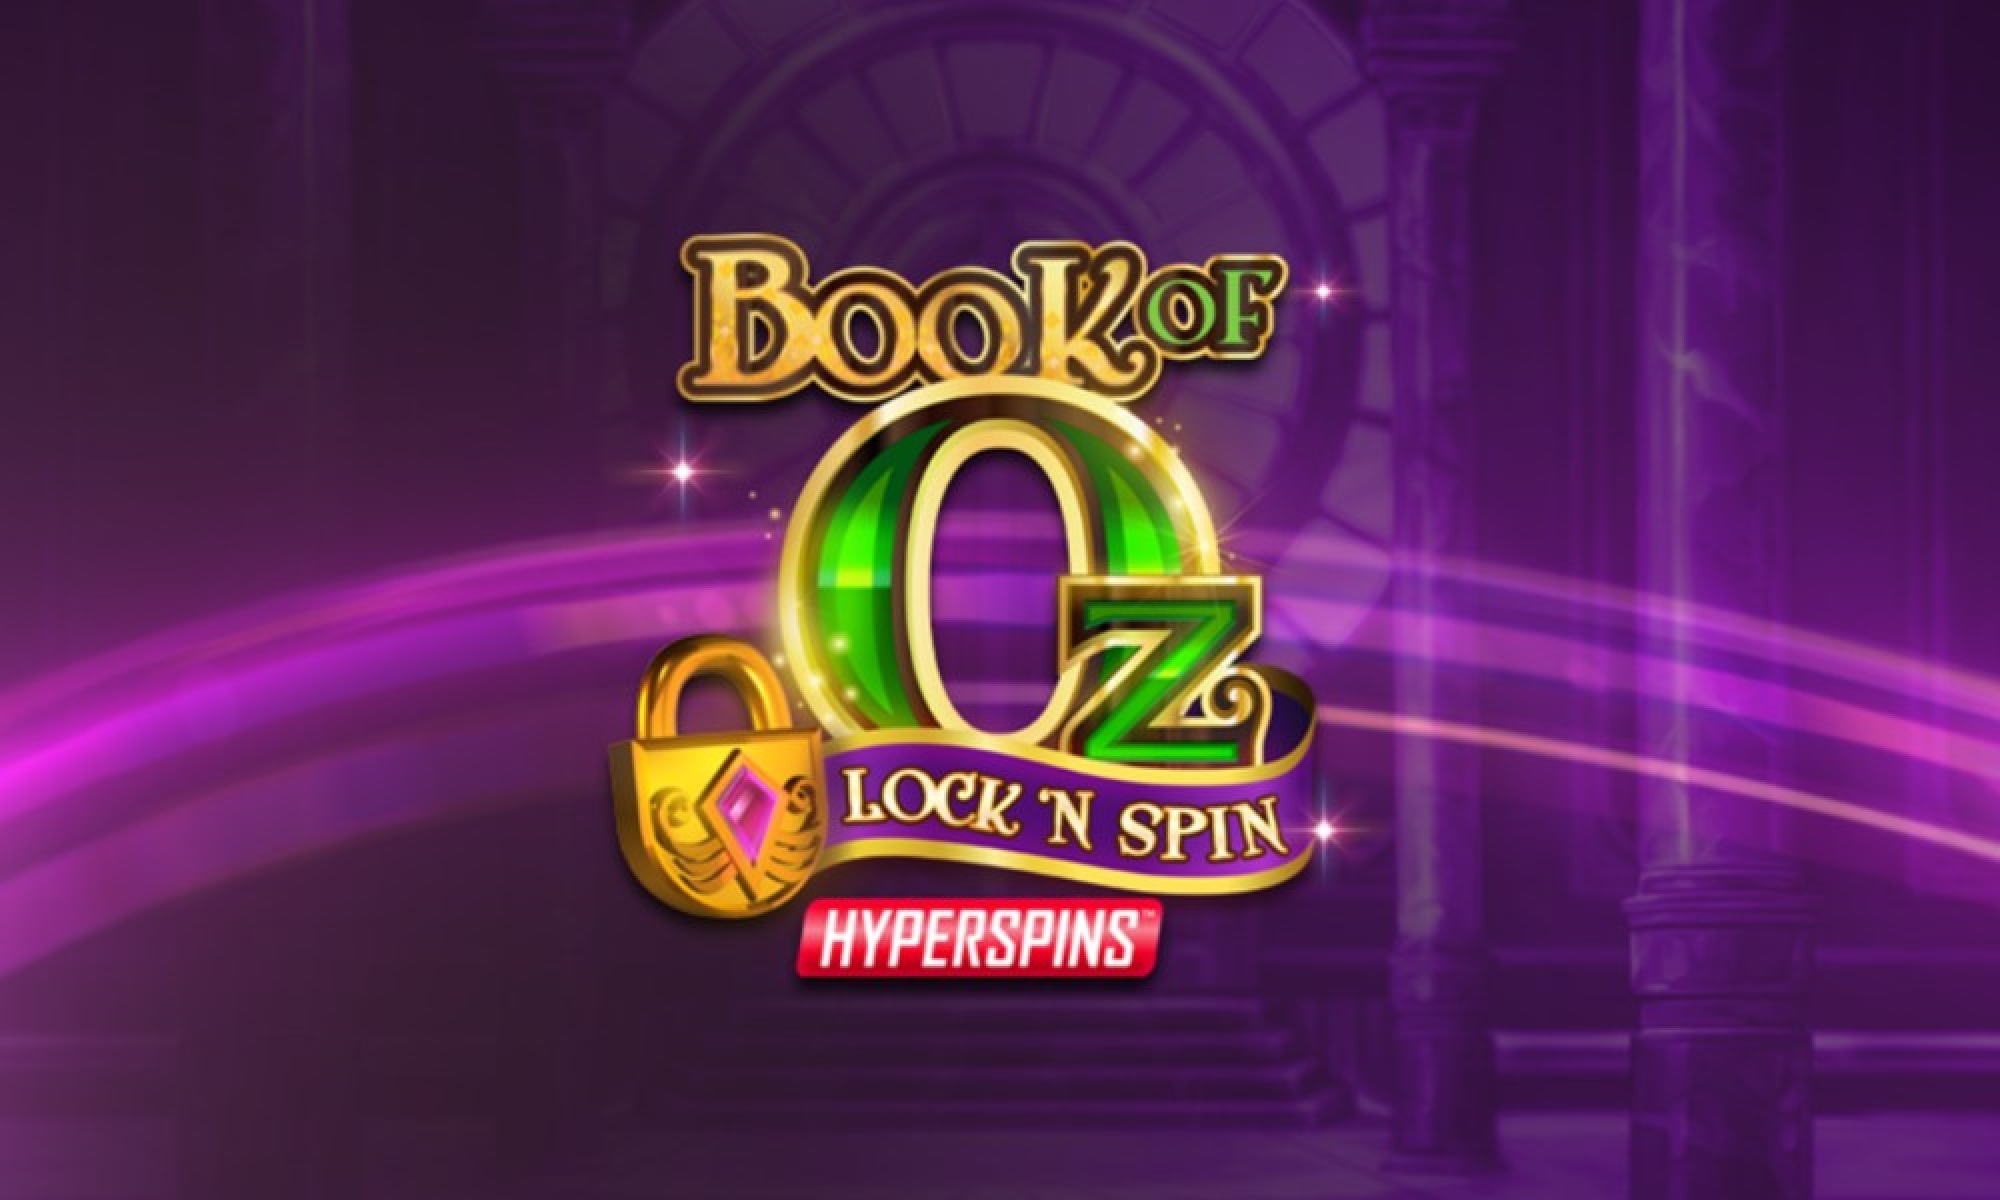 Book of Oz Lock 'N Spin demo